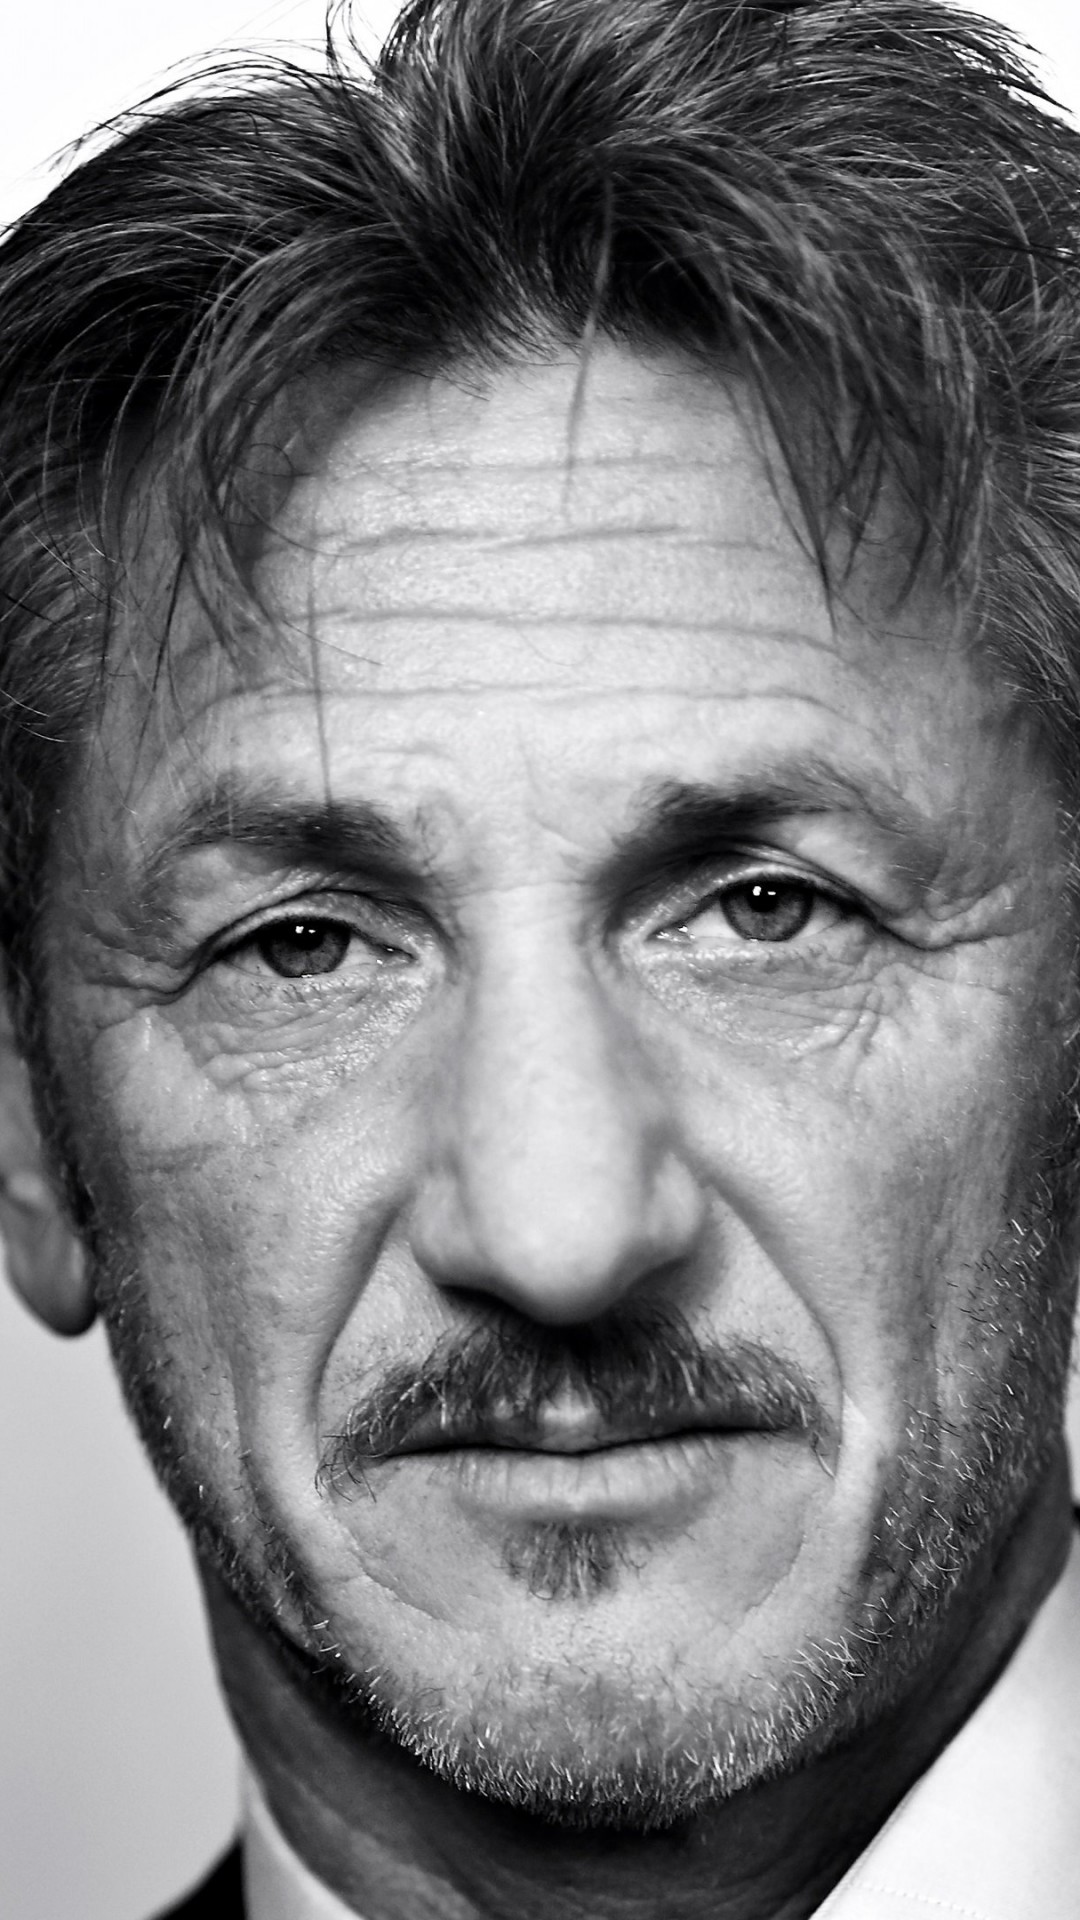 Sean Penn Portrait in Black & White Wallpaper for SAMSUNG Galaxy S5